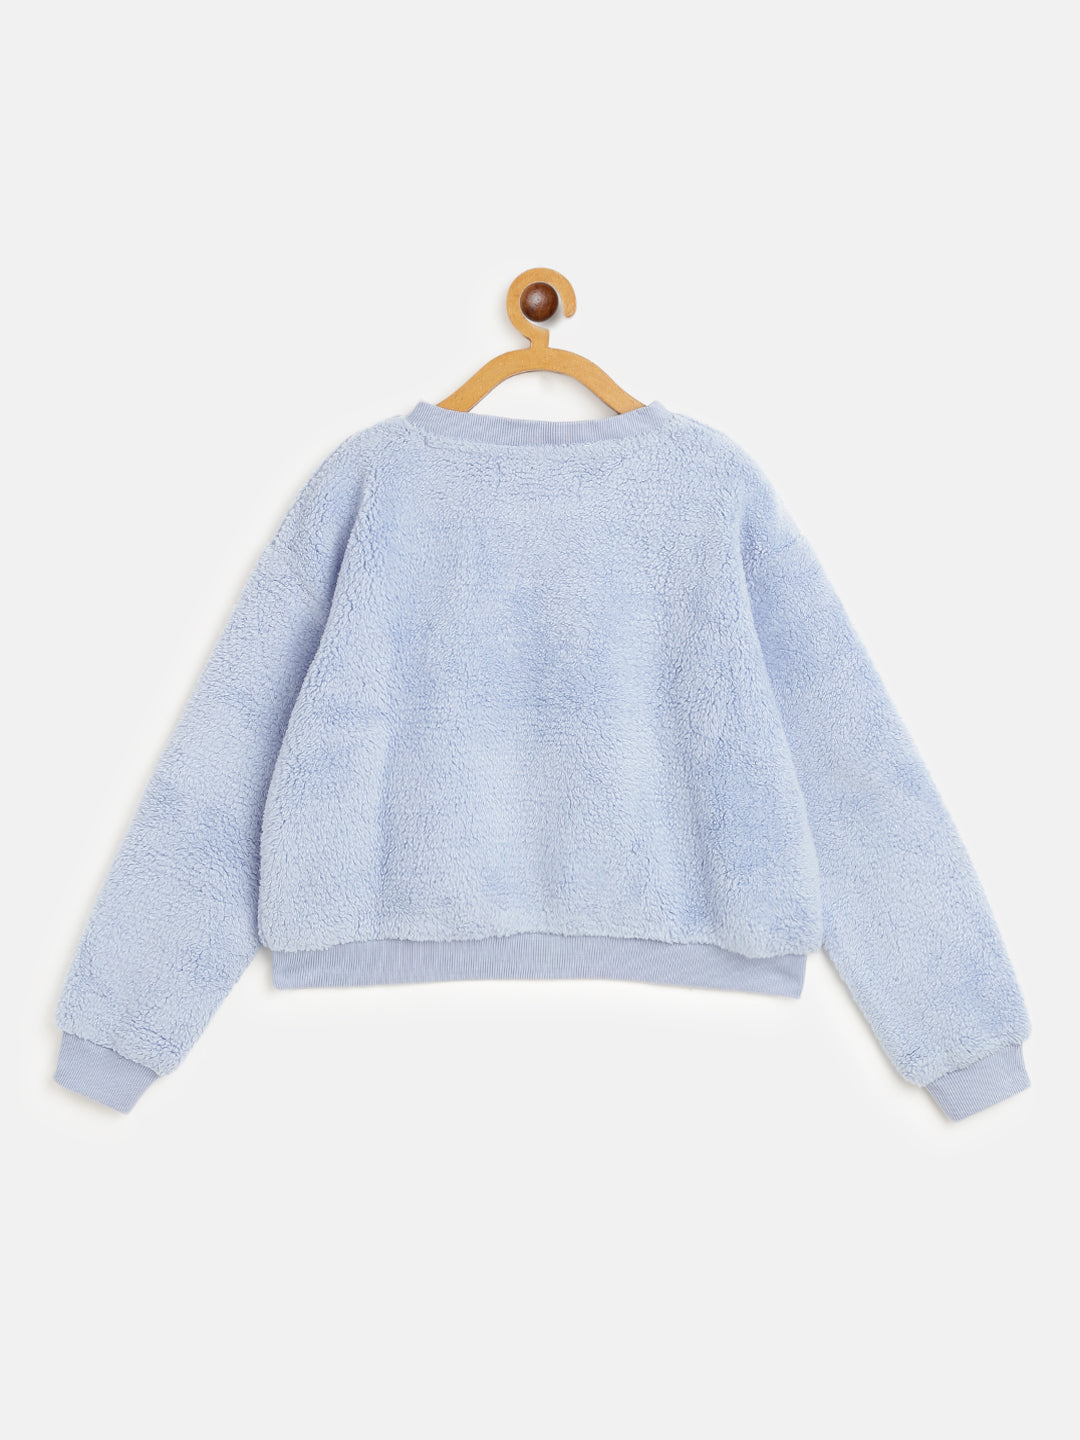 Girls Blue Fur Sweatshirt